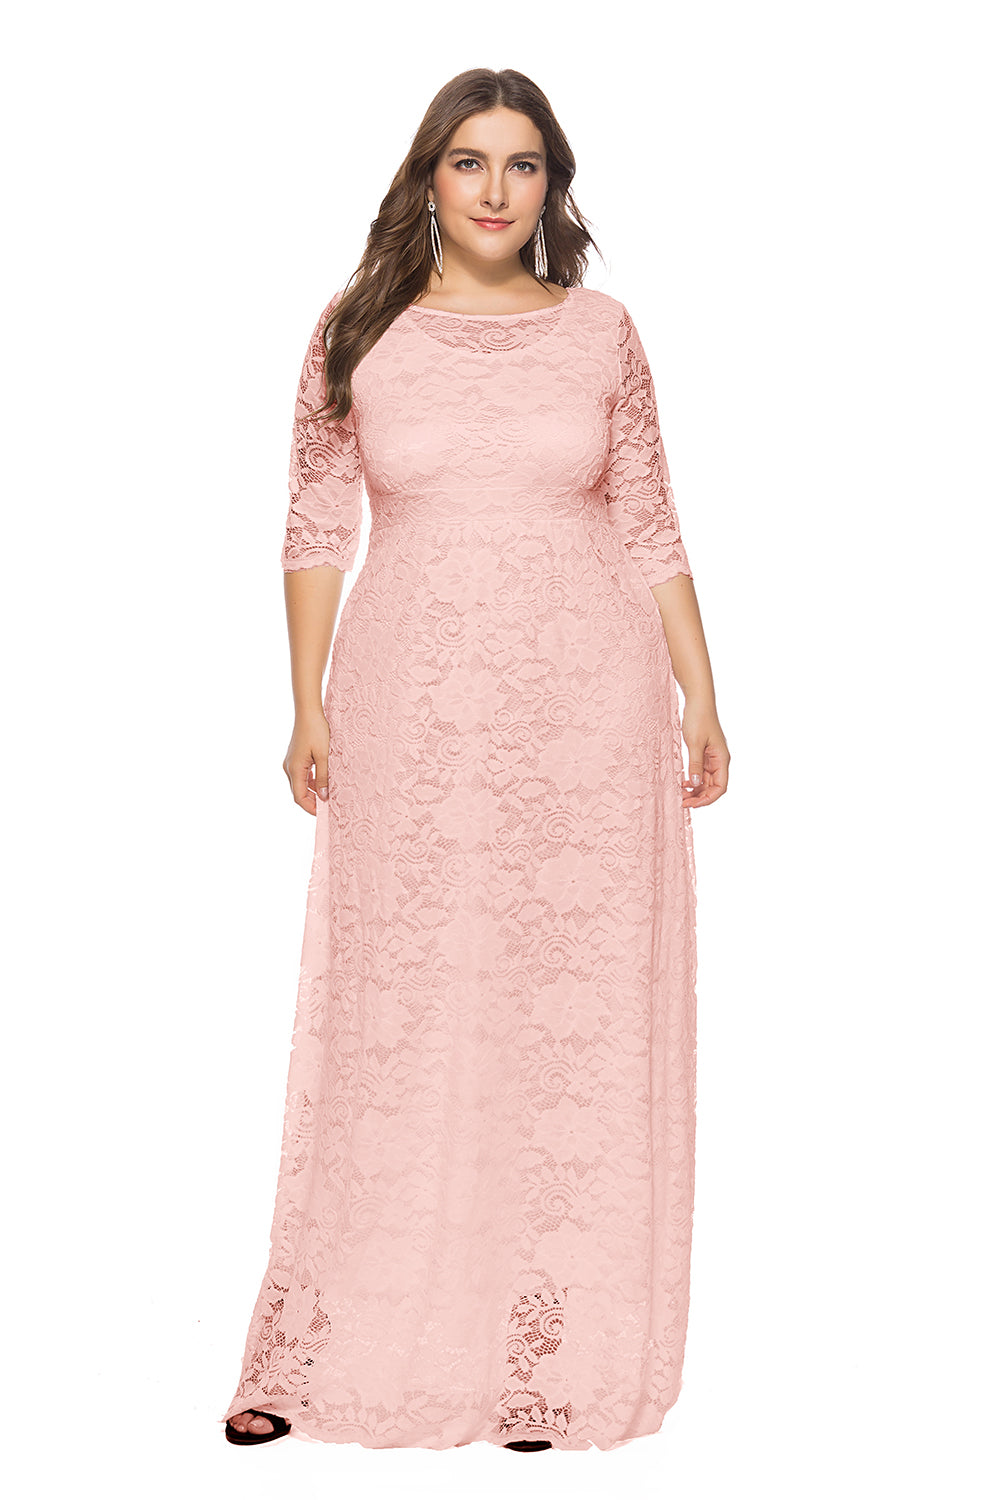 Plus Size Lace Maxi Evening Dress Sai Feel